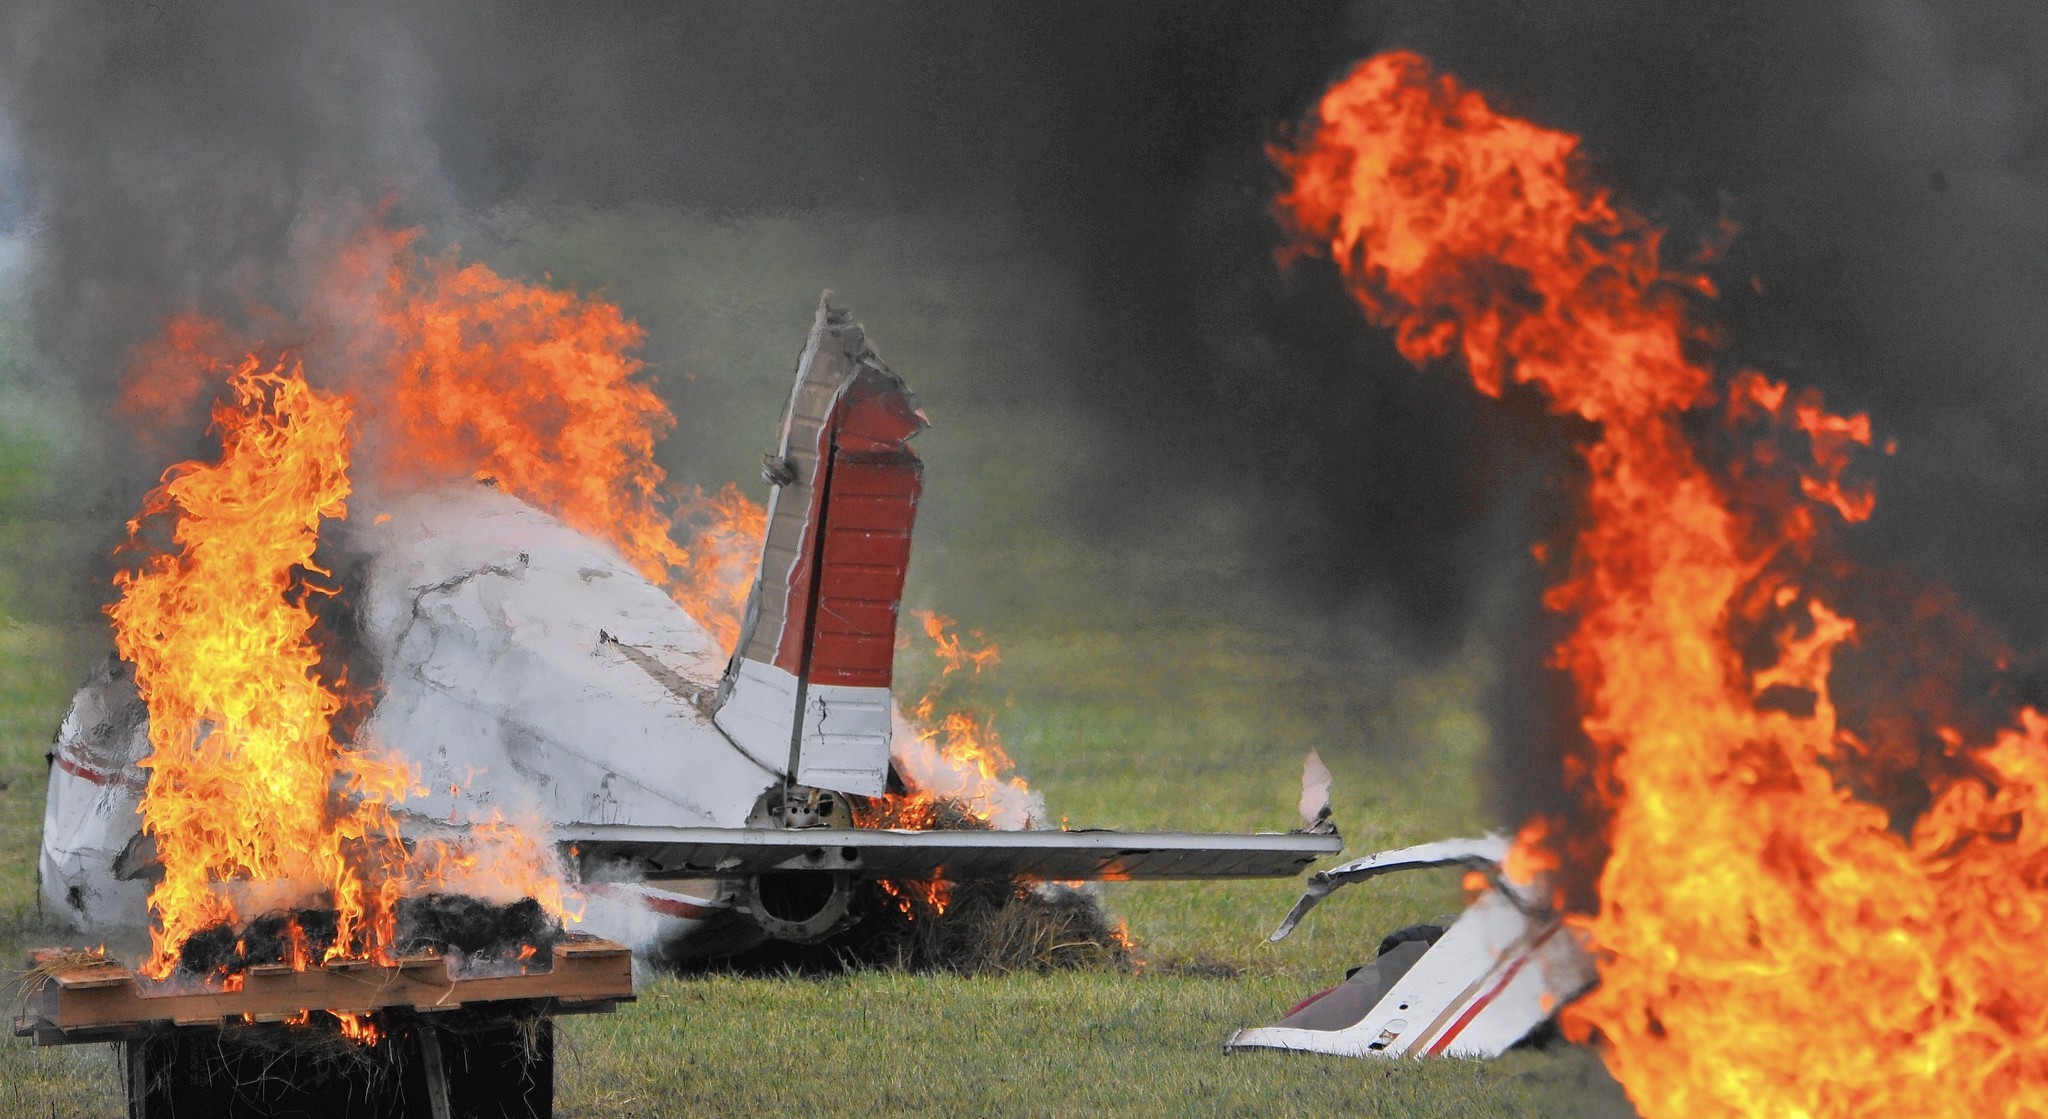 DuPage disaster drill tests emergency response to plane crash